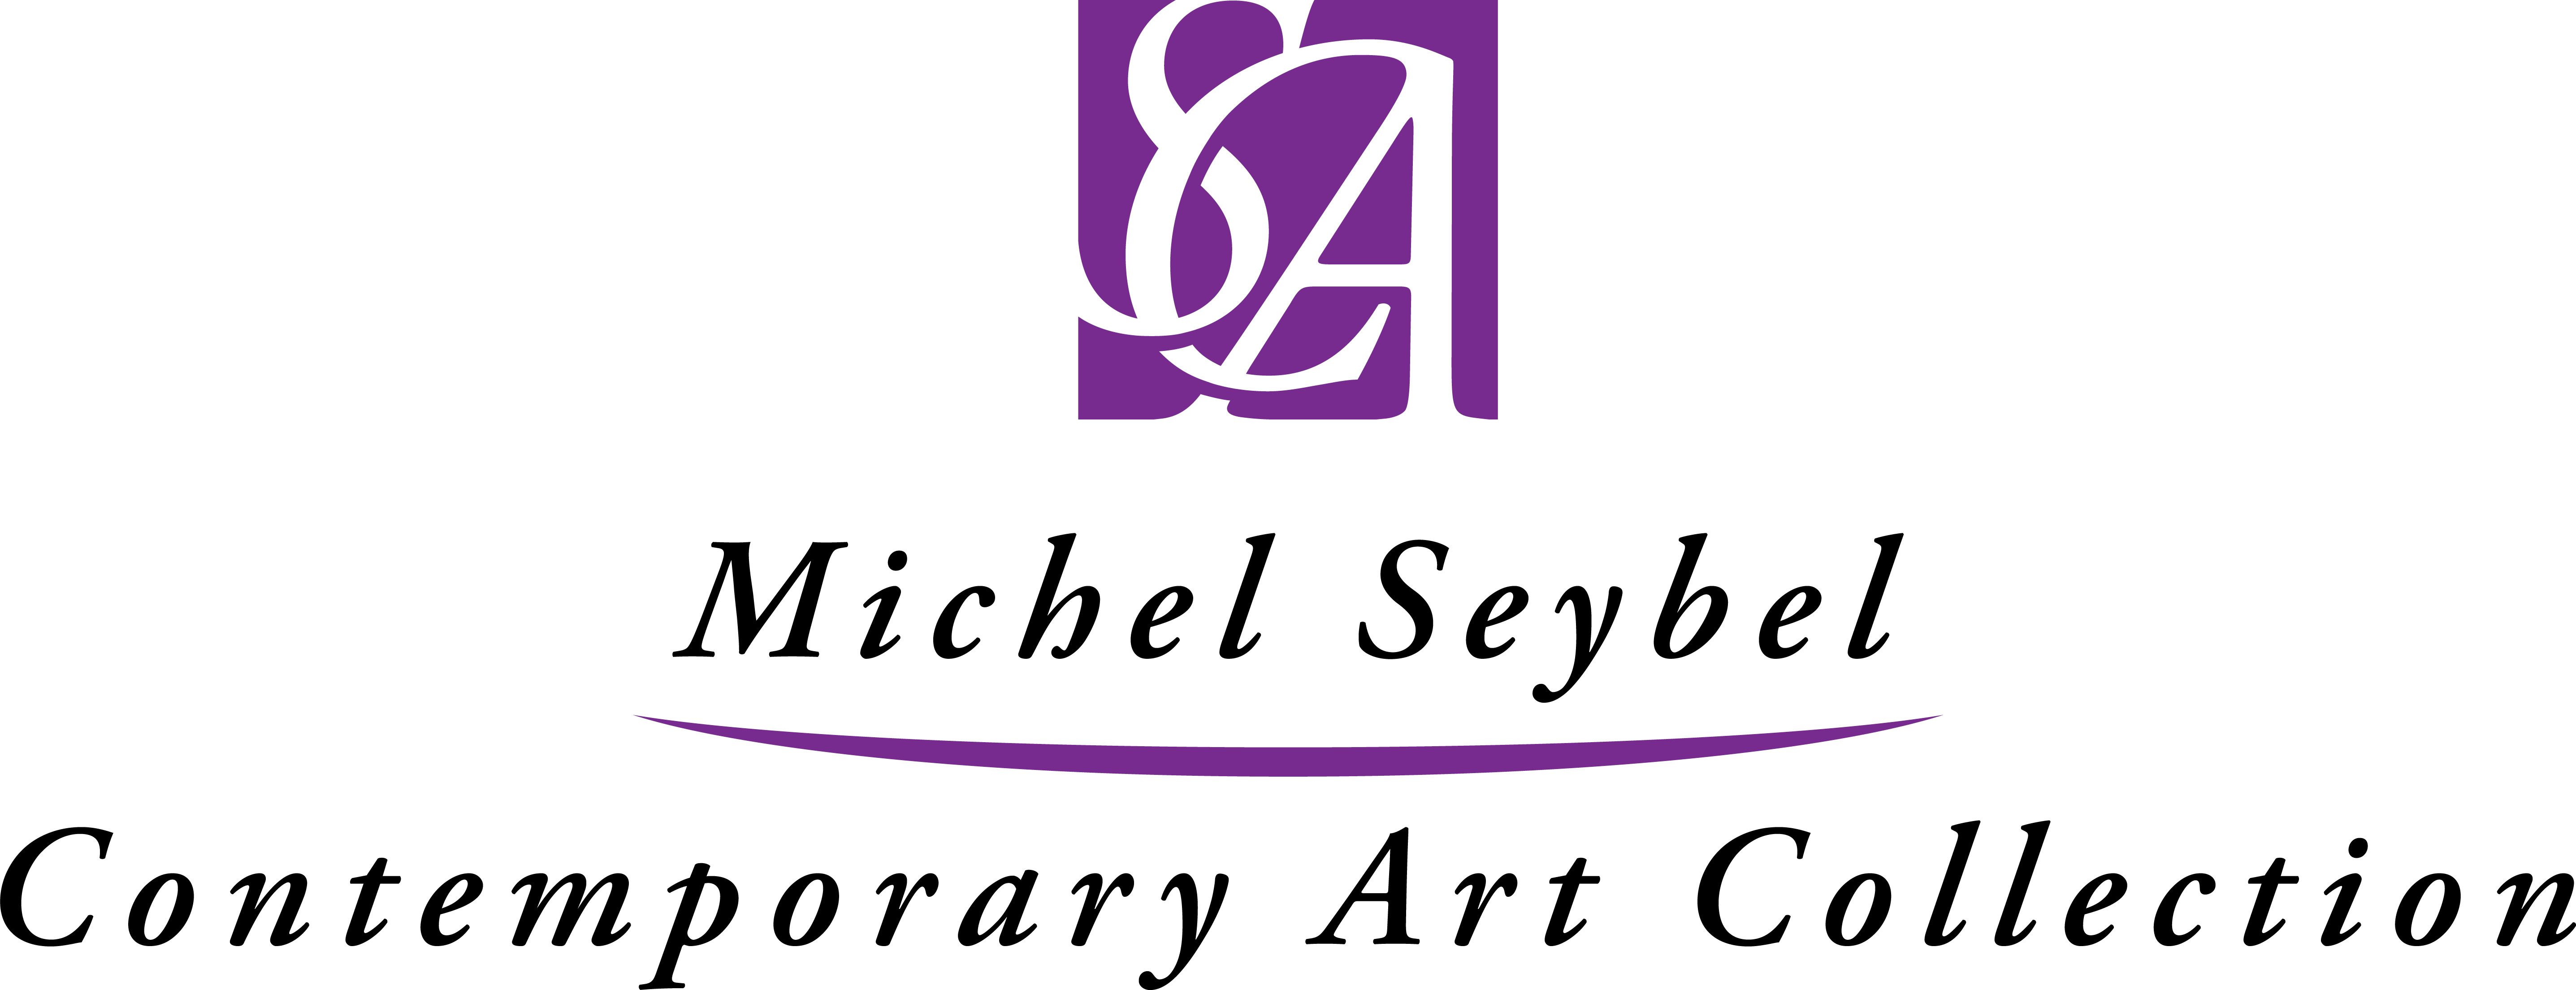 logo_michel_seybel_contemporary_art_collection.jpg